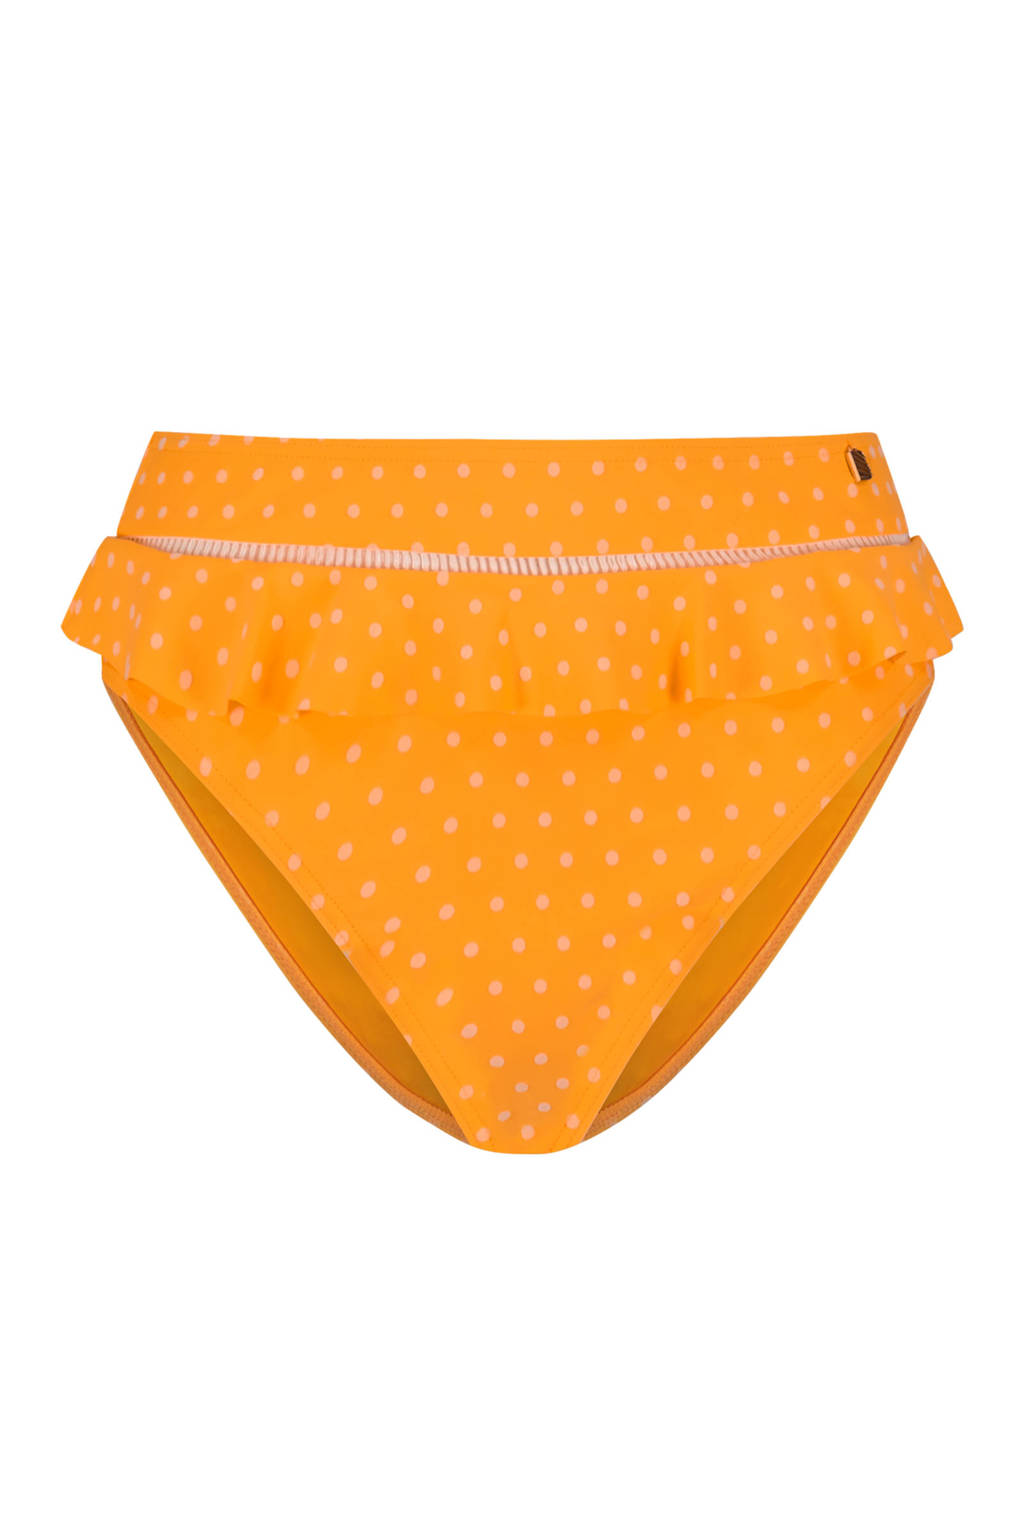 Beachlife high waist bikinibroekje met ruches en flockprint stippen oranje/wit